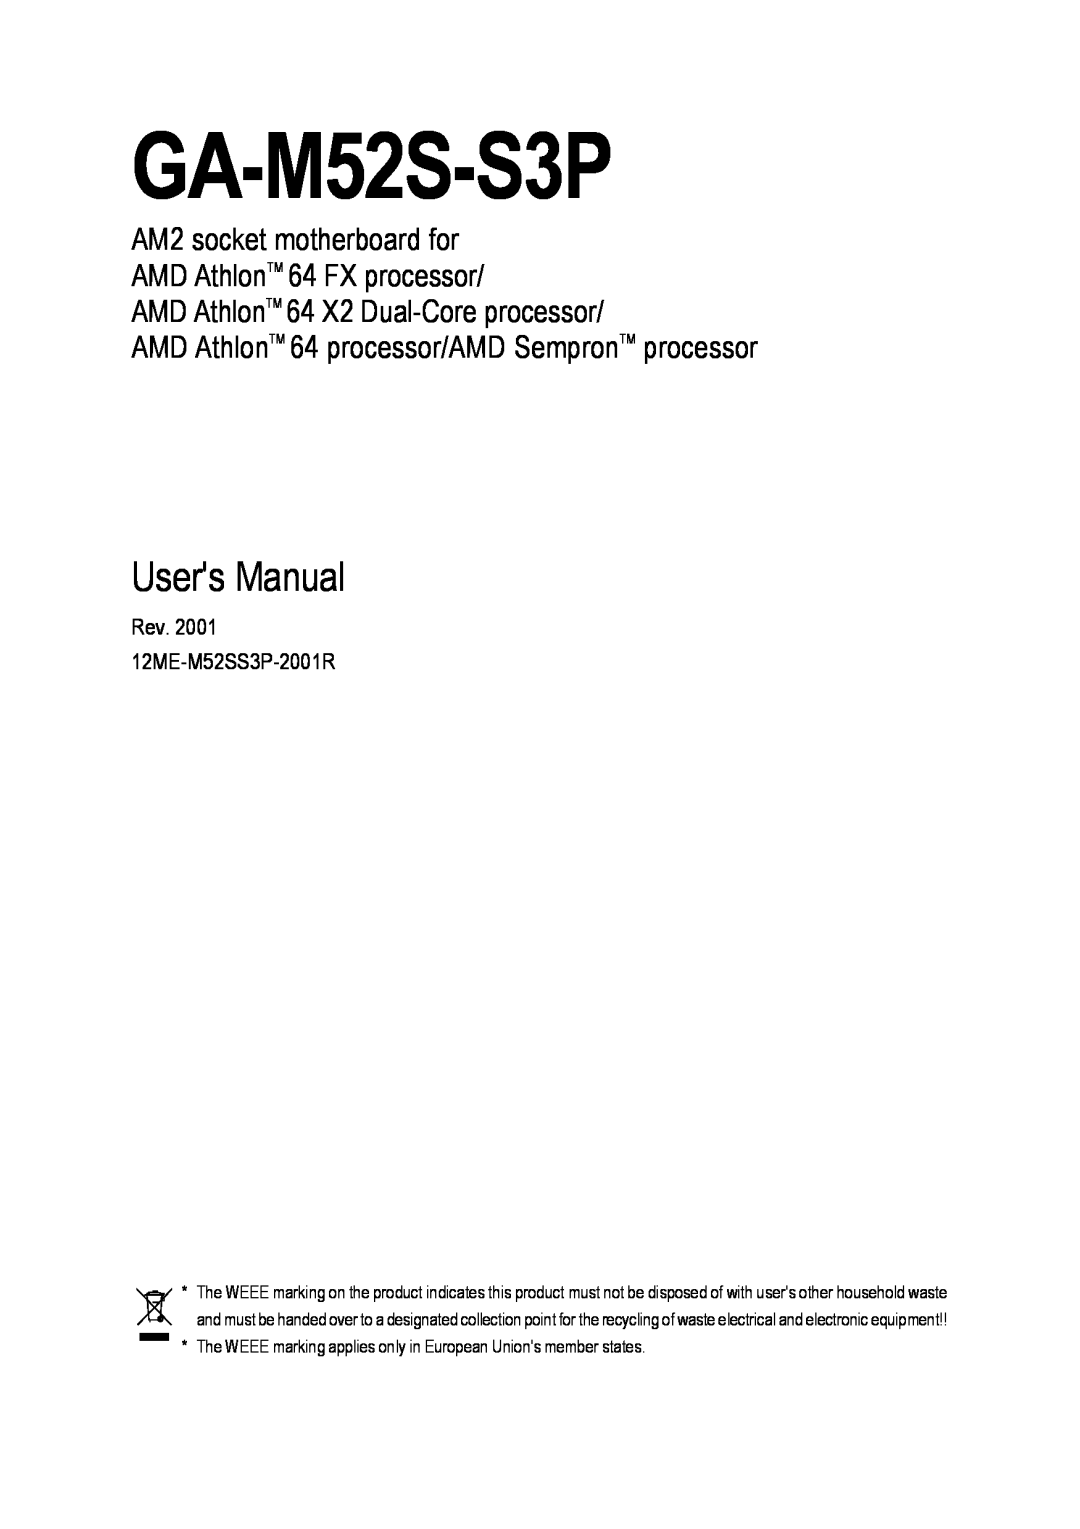 Gigabyte GA-M52S-S3P user manual Users Manual, AMD AthlonTM 64 X2 Dual-Core processor 